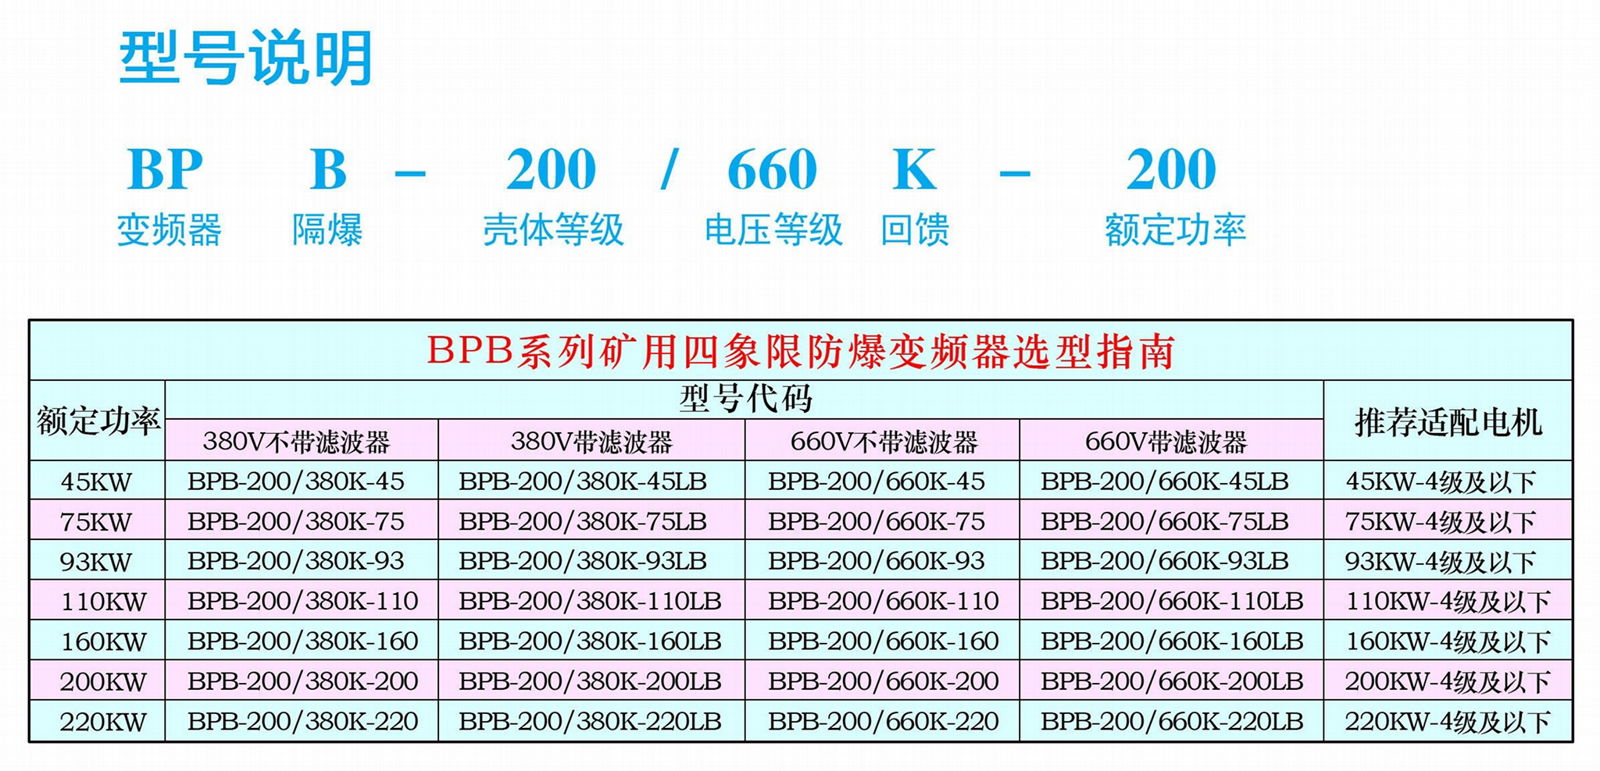 BPB-200/660K矿用四象限防爆变频器 3